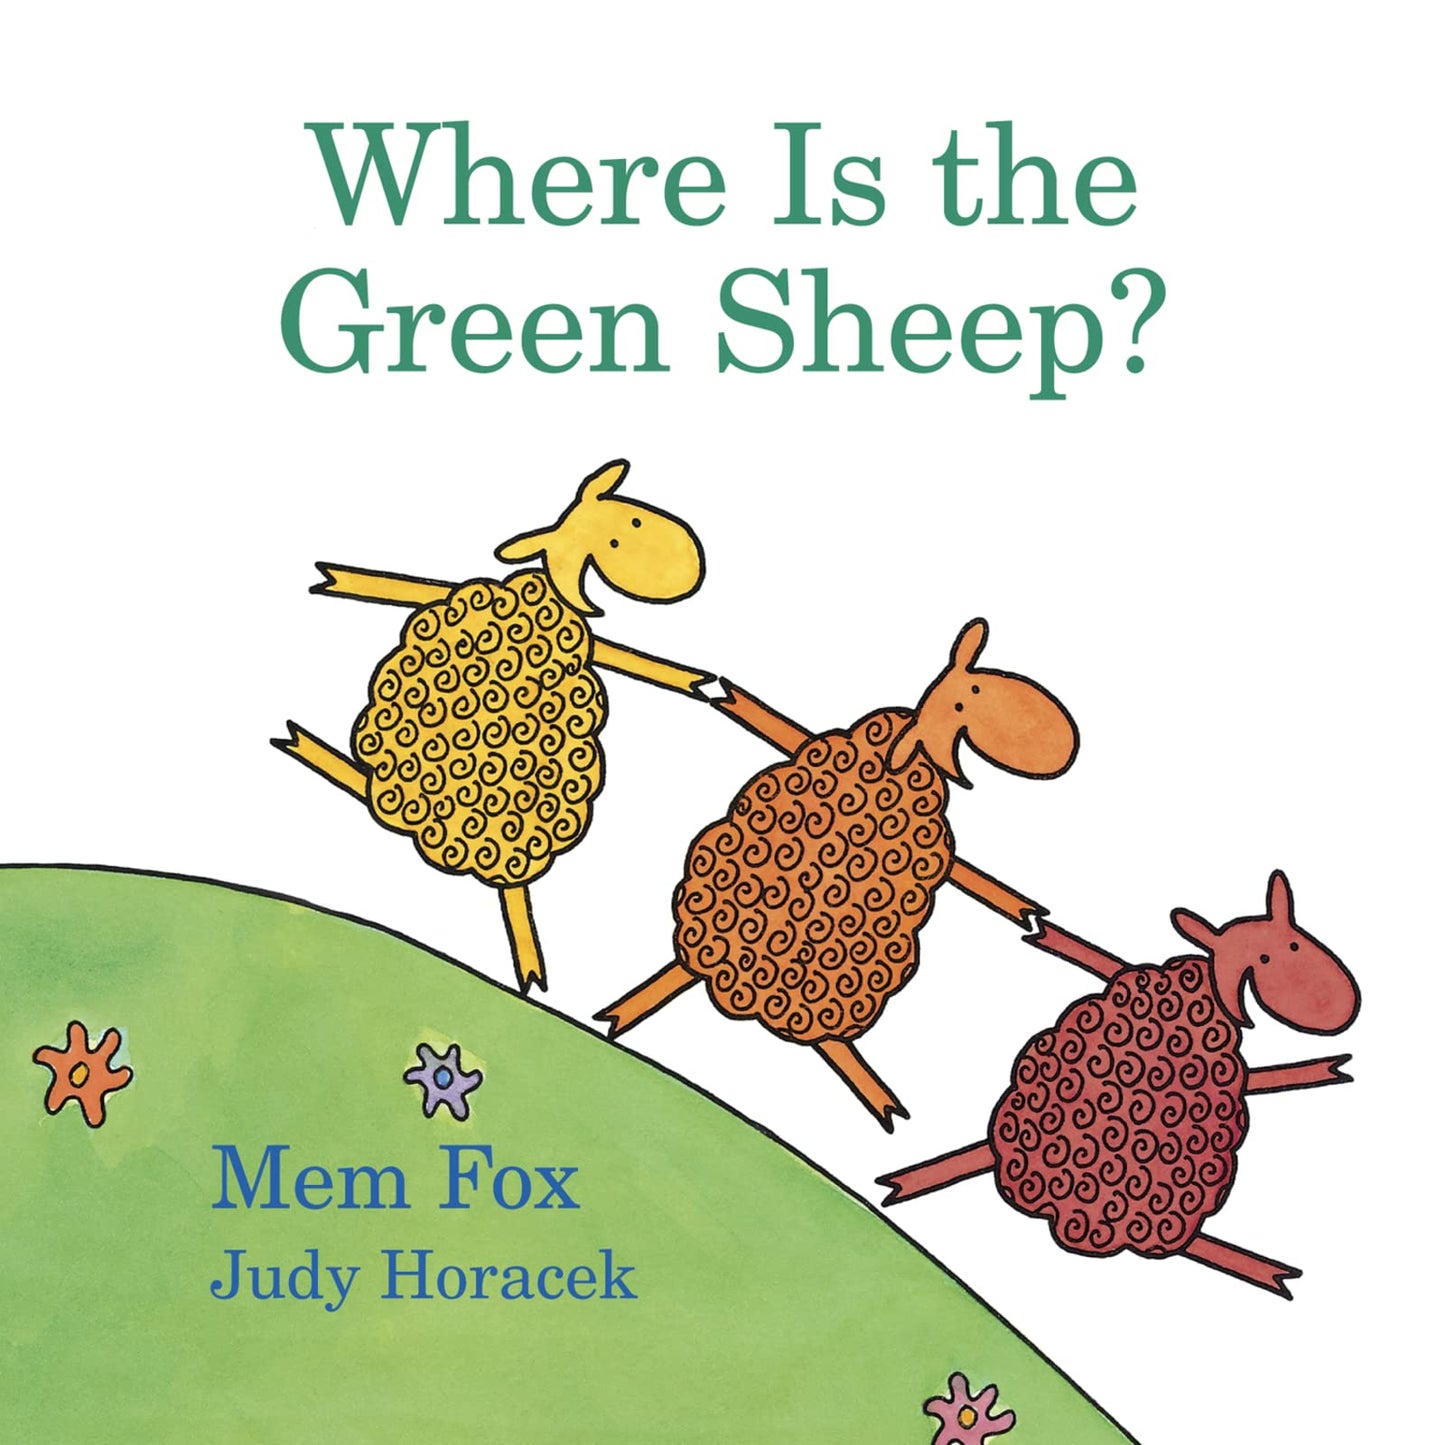 Where Is the Green Sheep? (Board Book)